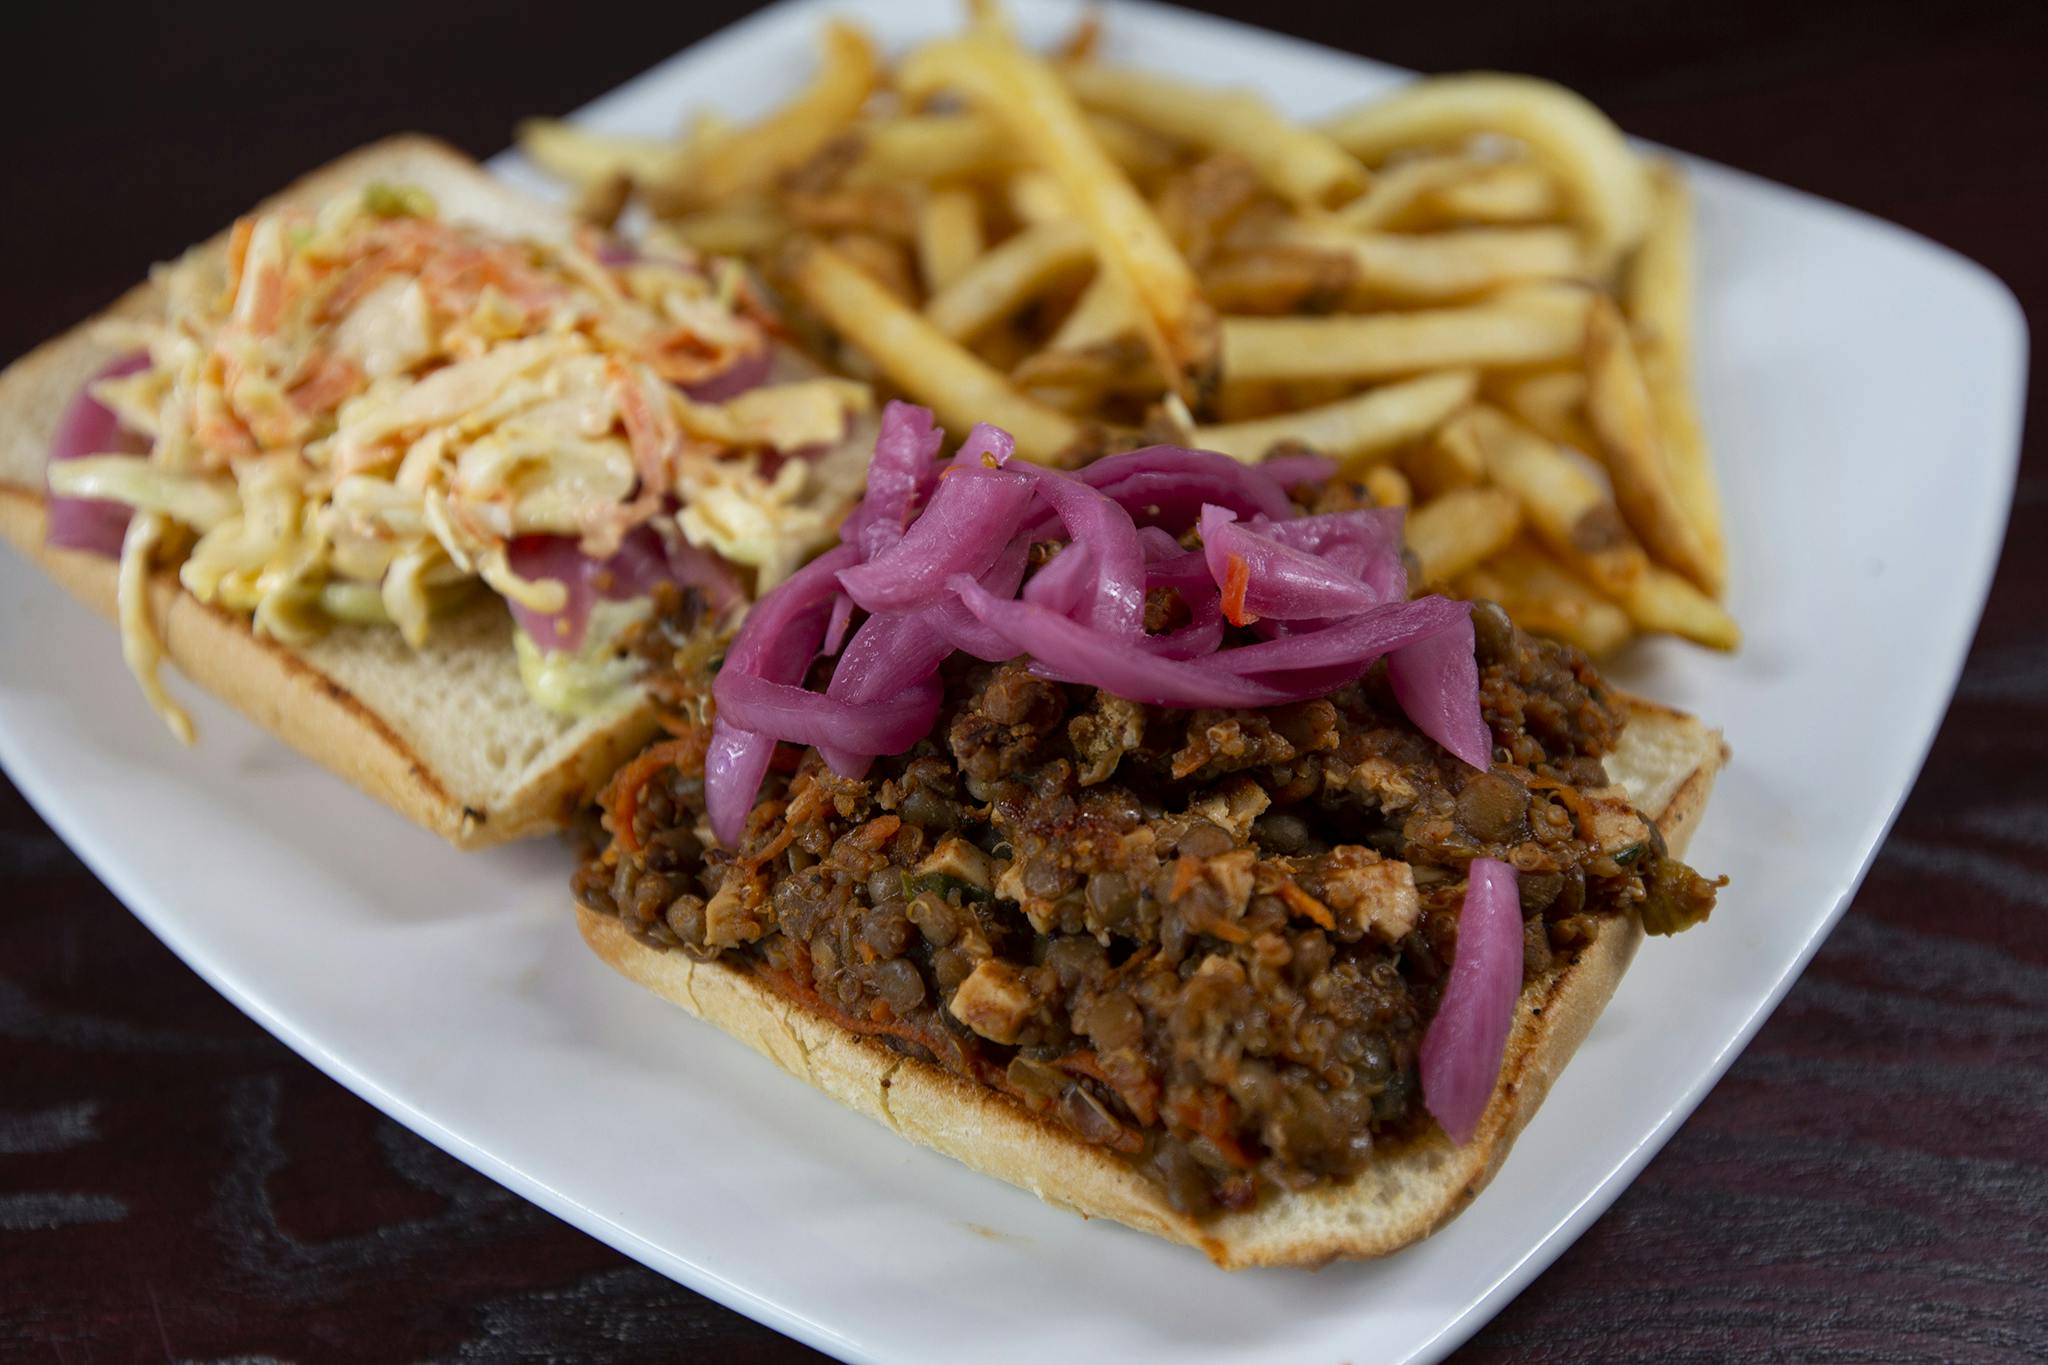 Veggie Sloppy Joe Sandwich from Firehouse Grill - Chicago Ave in Evanston, IL